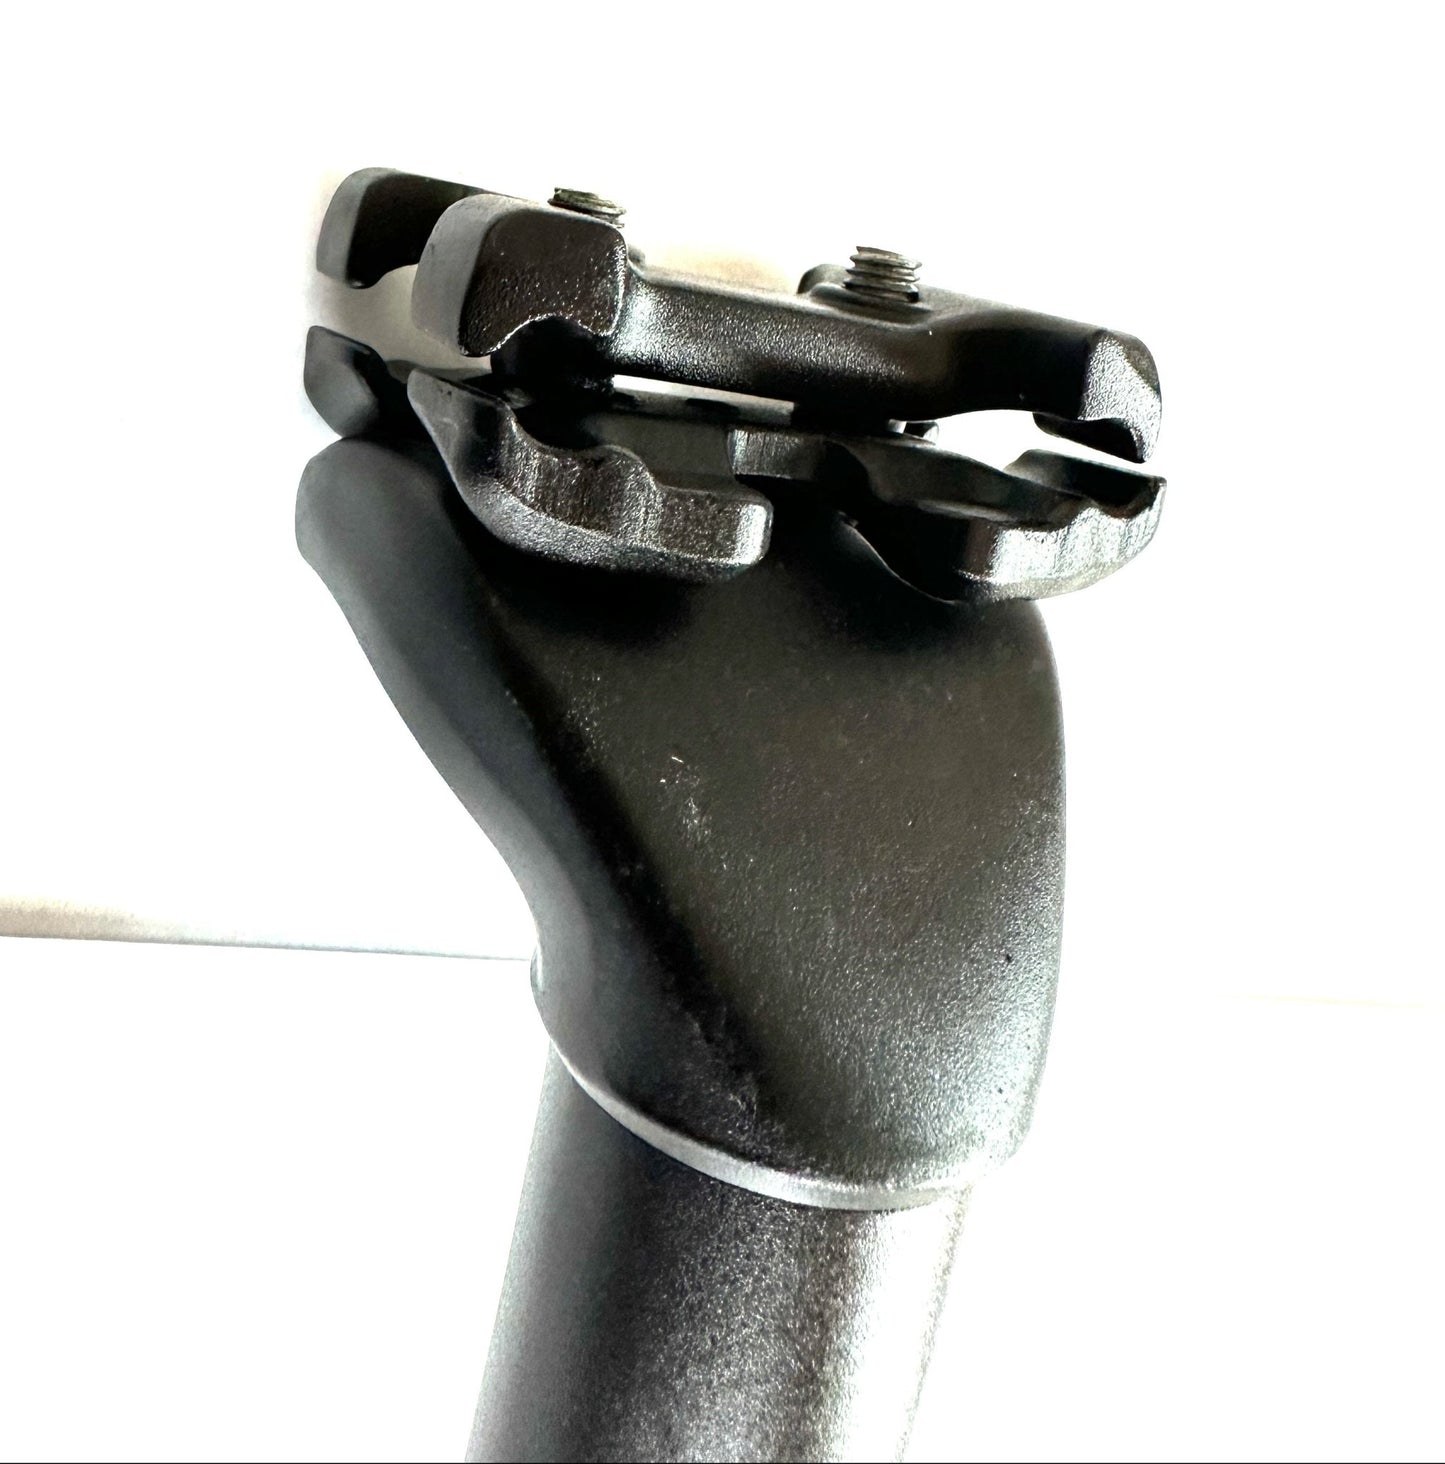 FRAMED Lightweight Alloy Road Bike Bicycle Seatpost 27.2mm X 350mm Black NEW - Random Bike Parts